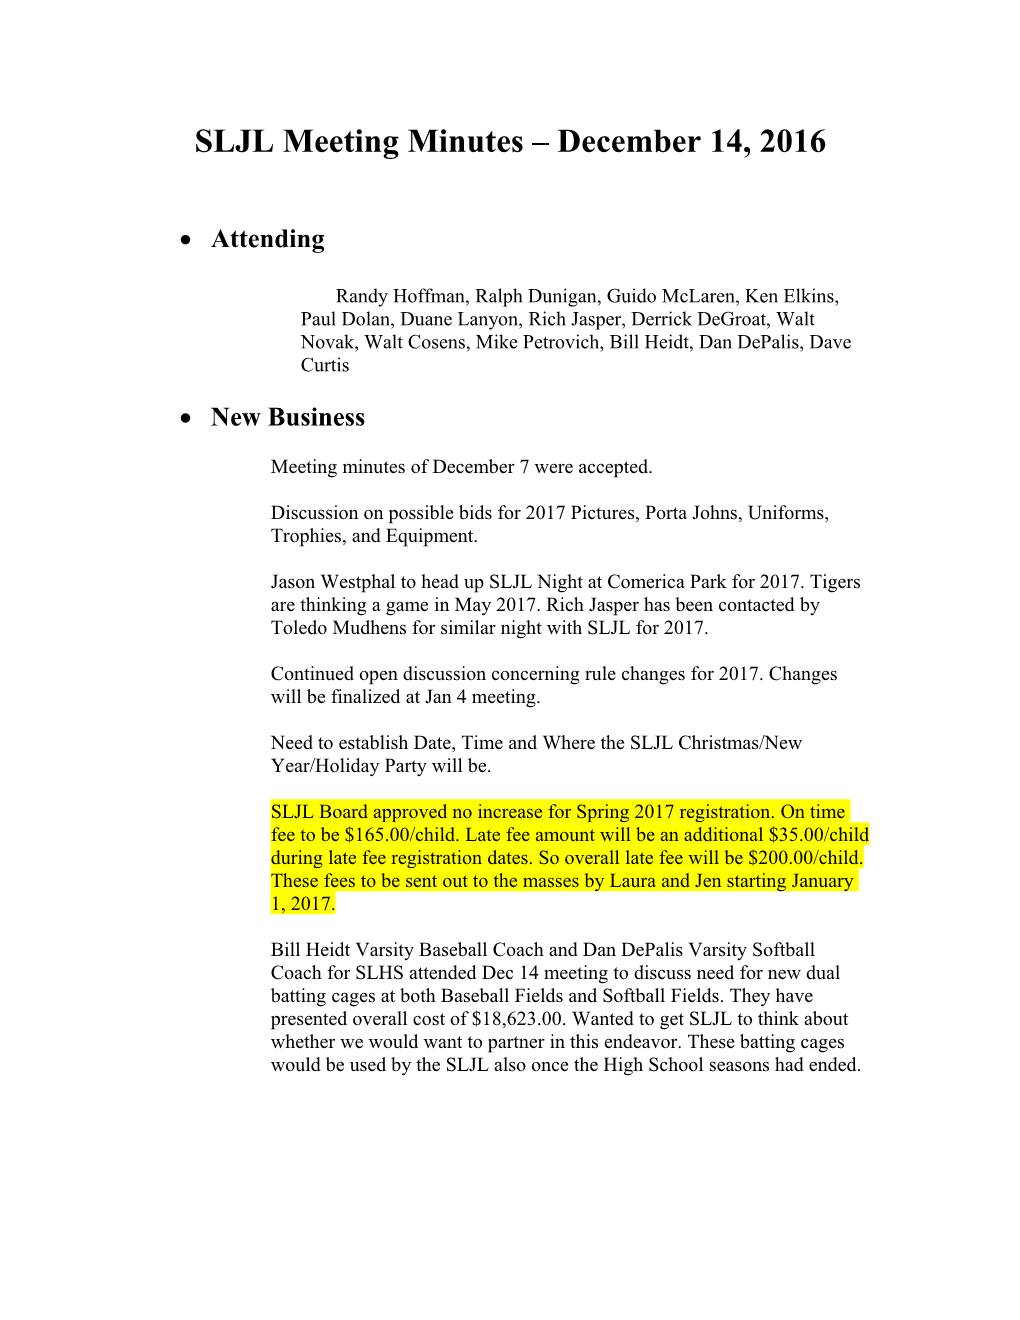 SLJL Meeting Minutes - November 4, 2009 s1